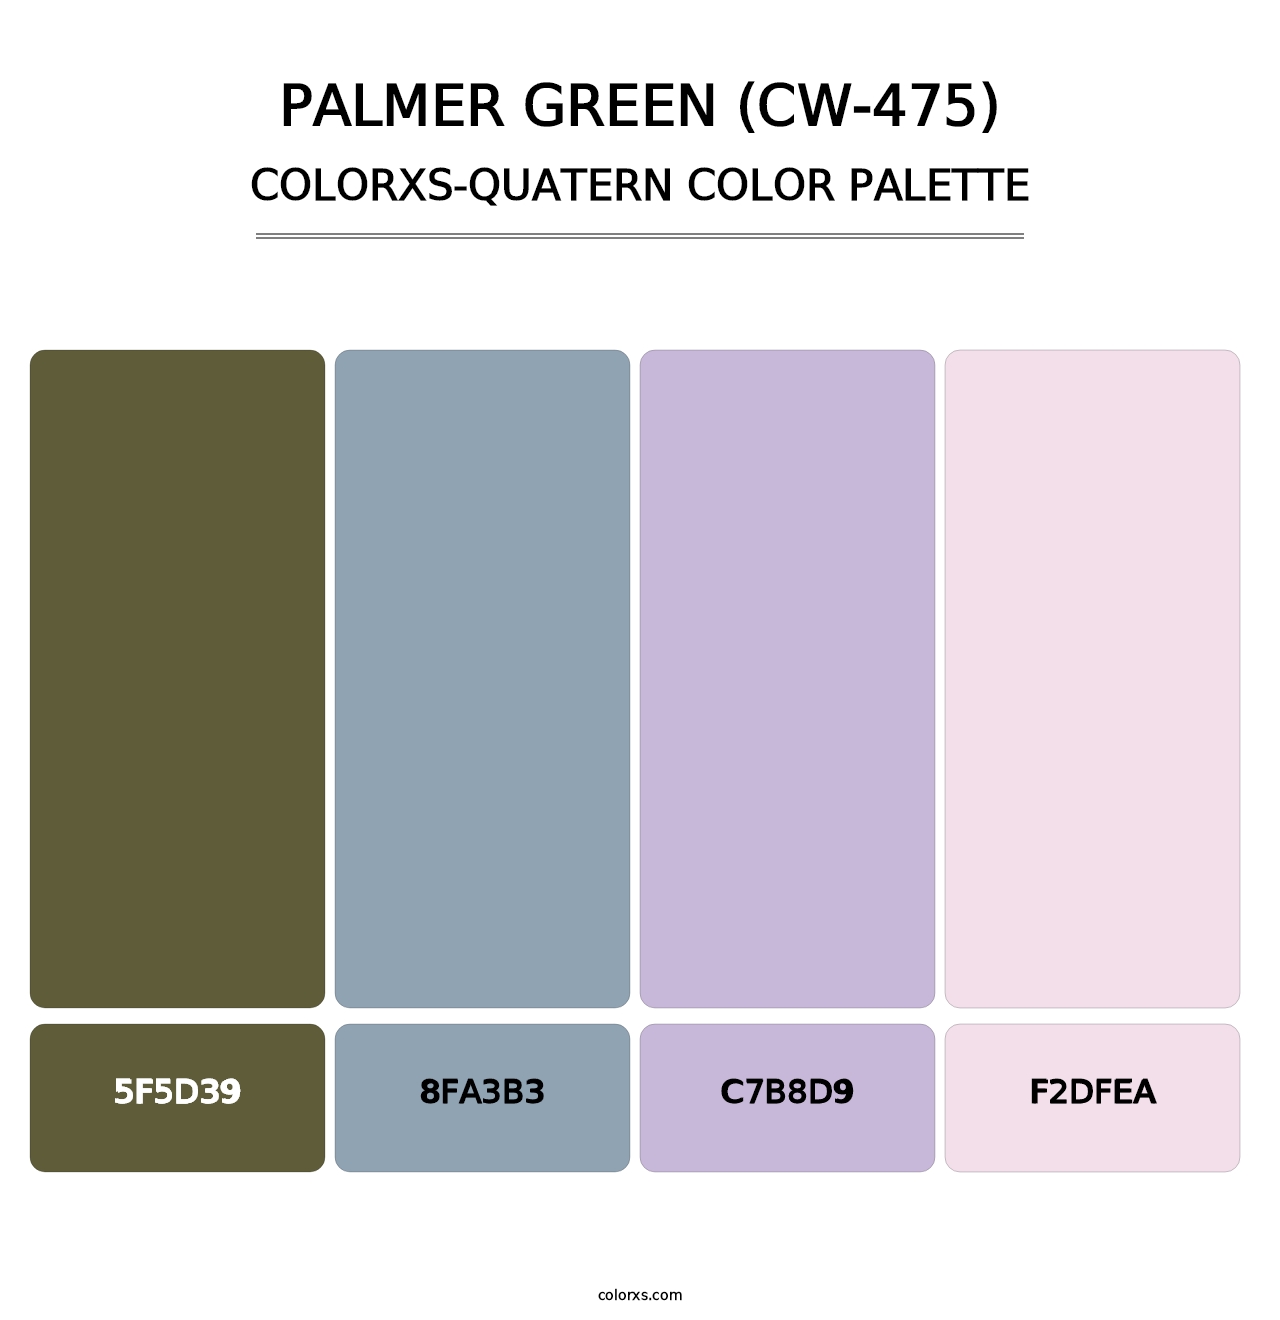 Palmer Green (CW-475) - Colorxs Quatern Palette